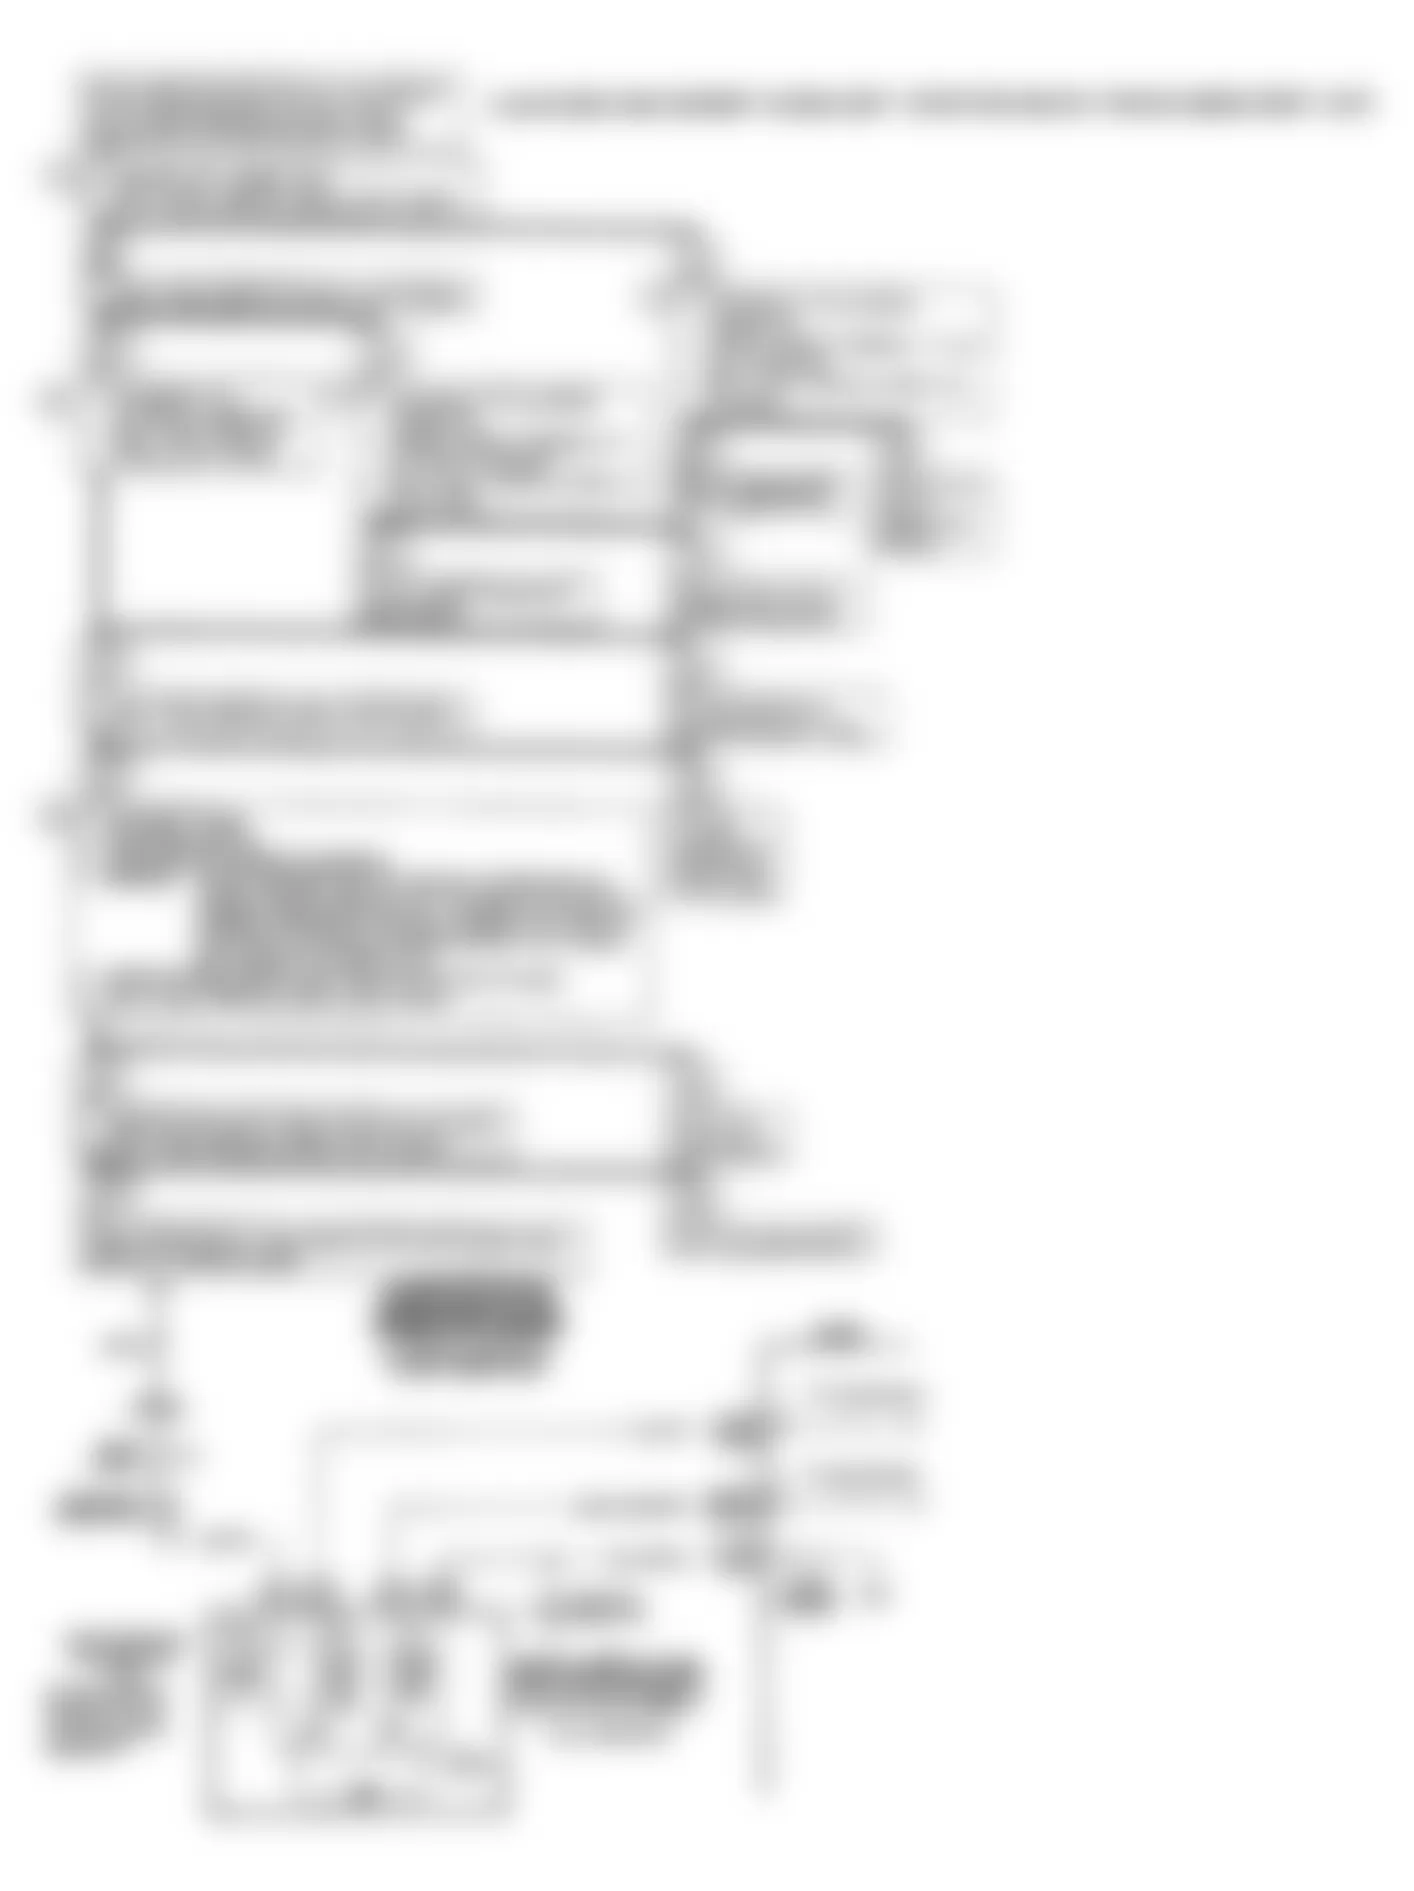 Buick Regal Custom 1990 - Component Locations -  Code 62: Gear Switch Error Schematic & Flow Chart (J Body)